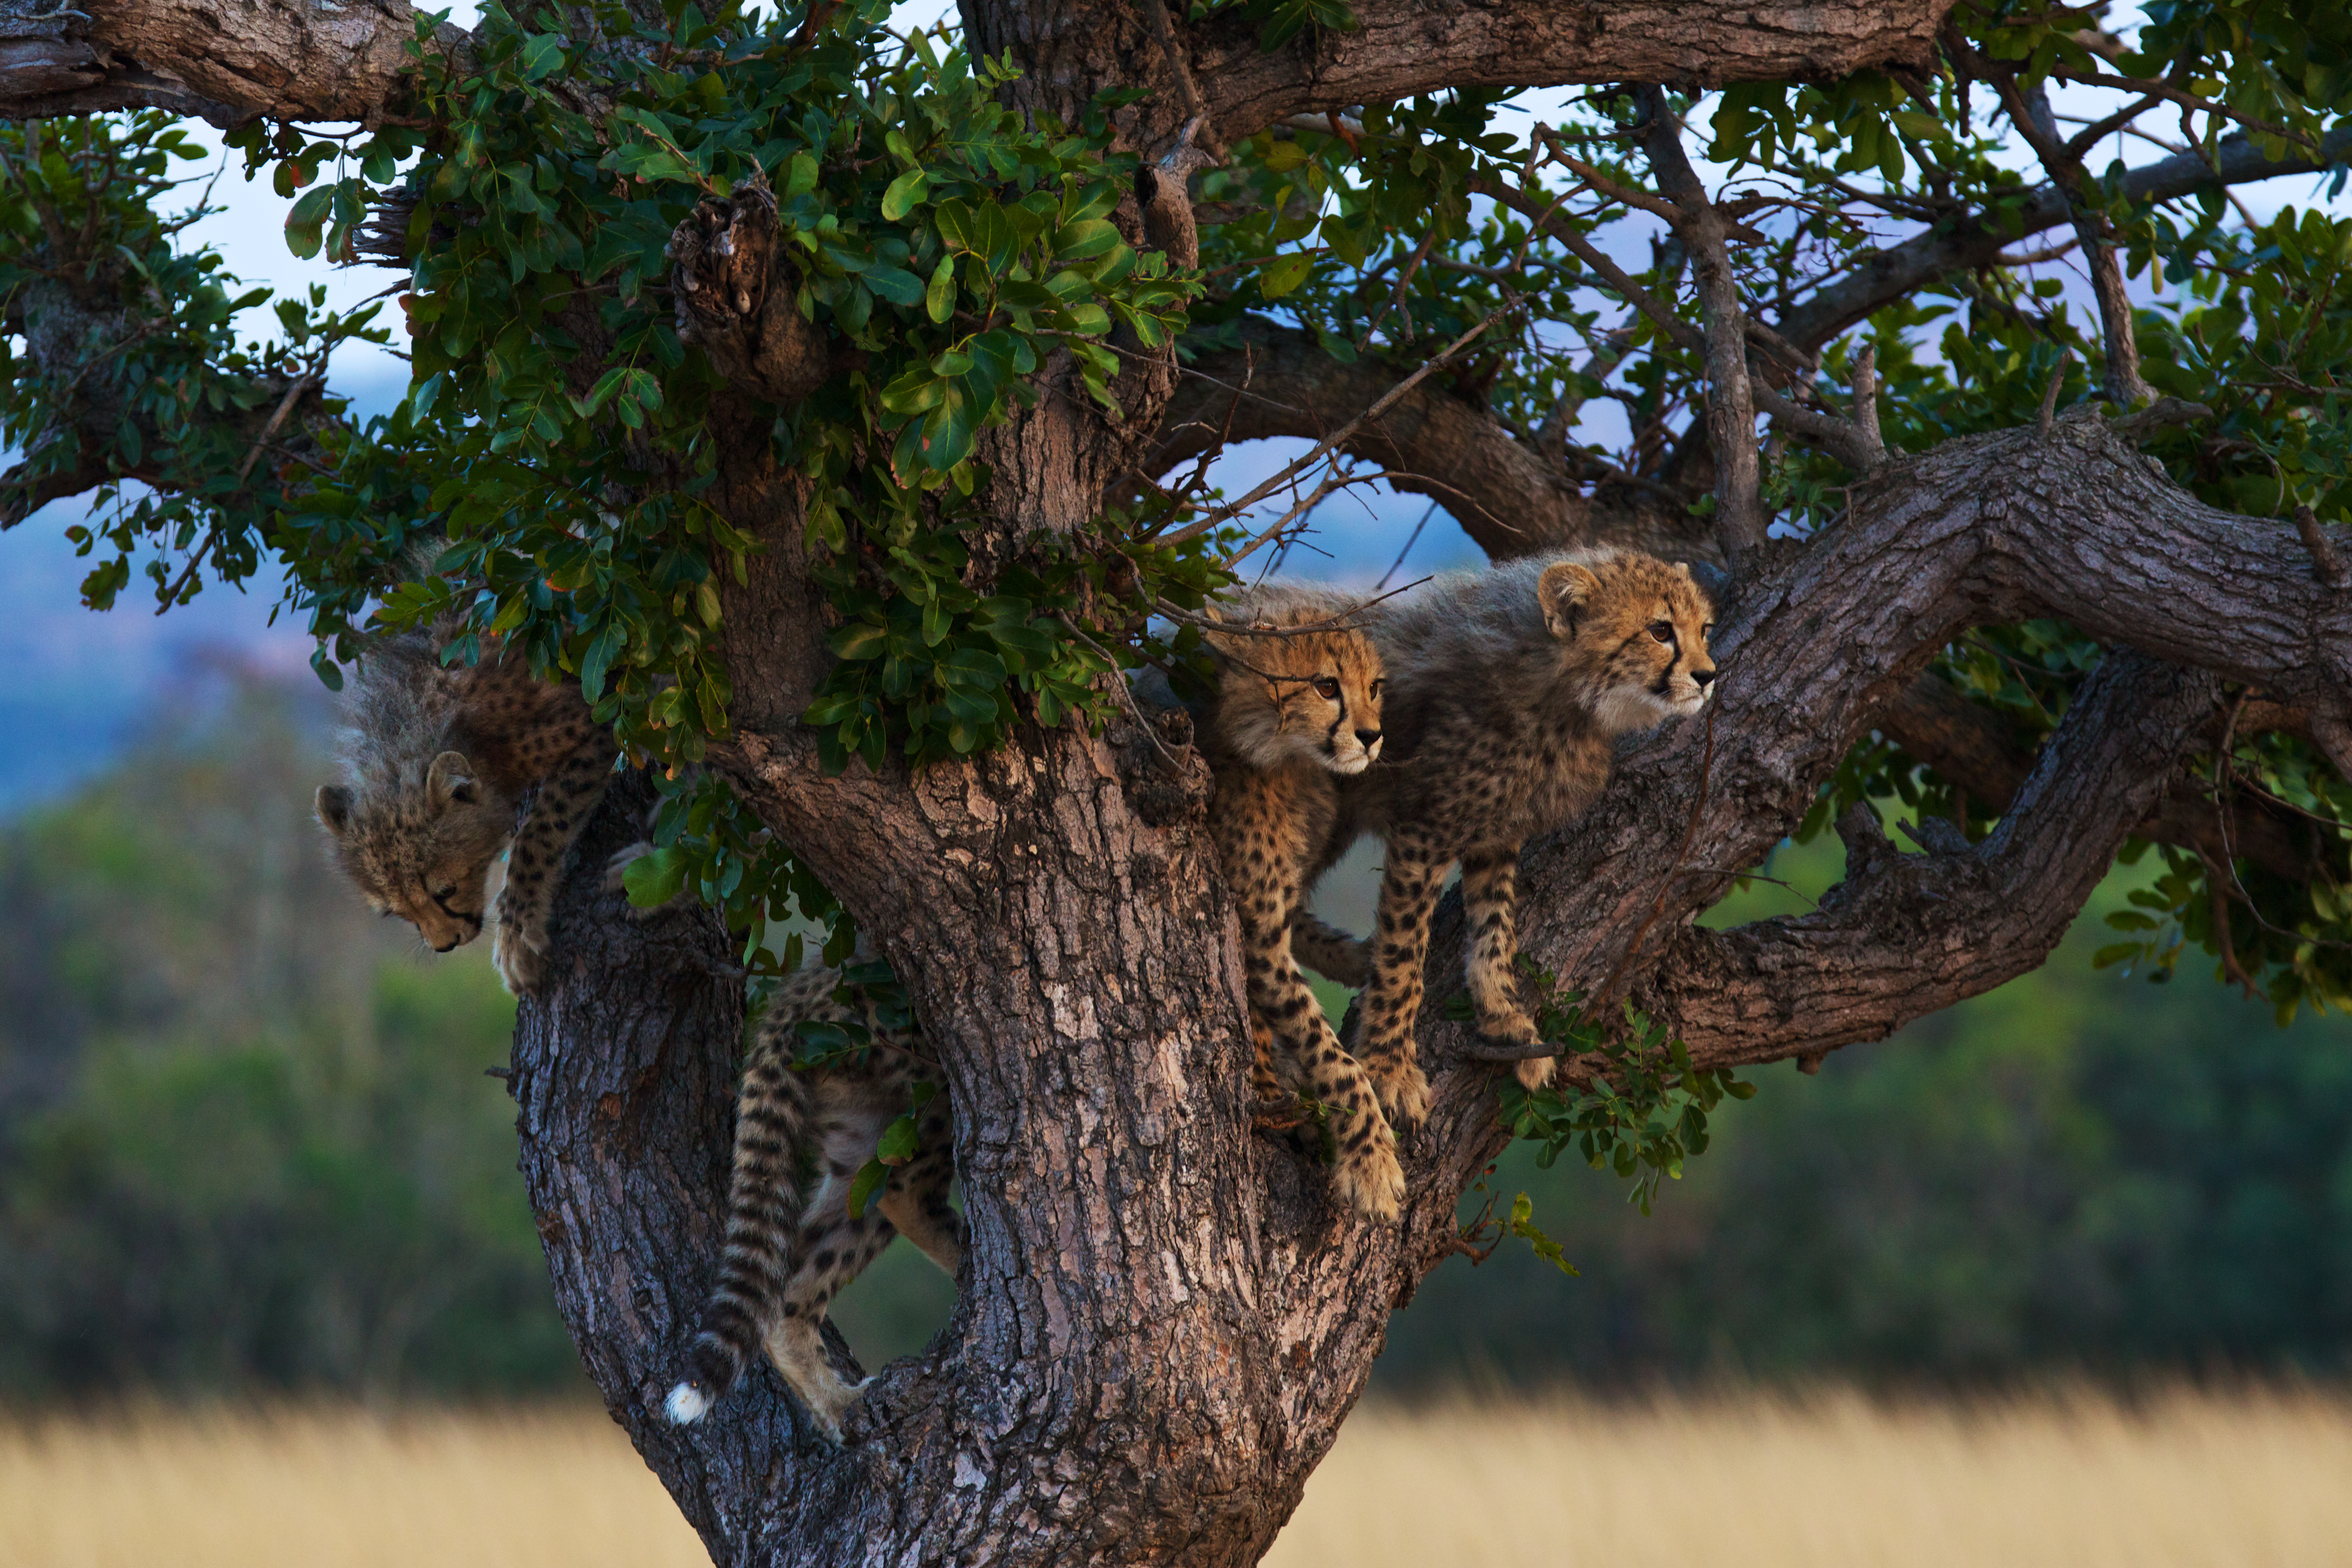 "Cheetah Cubs in tree"